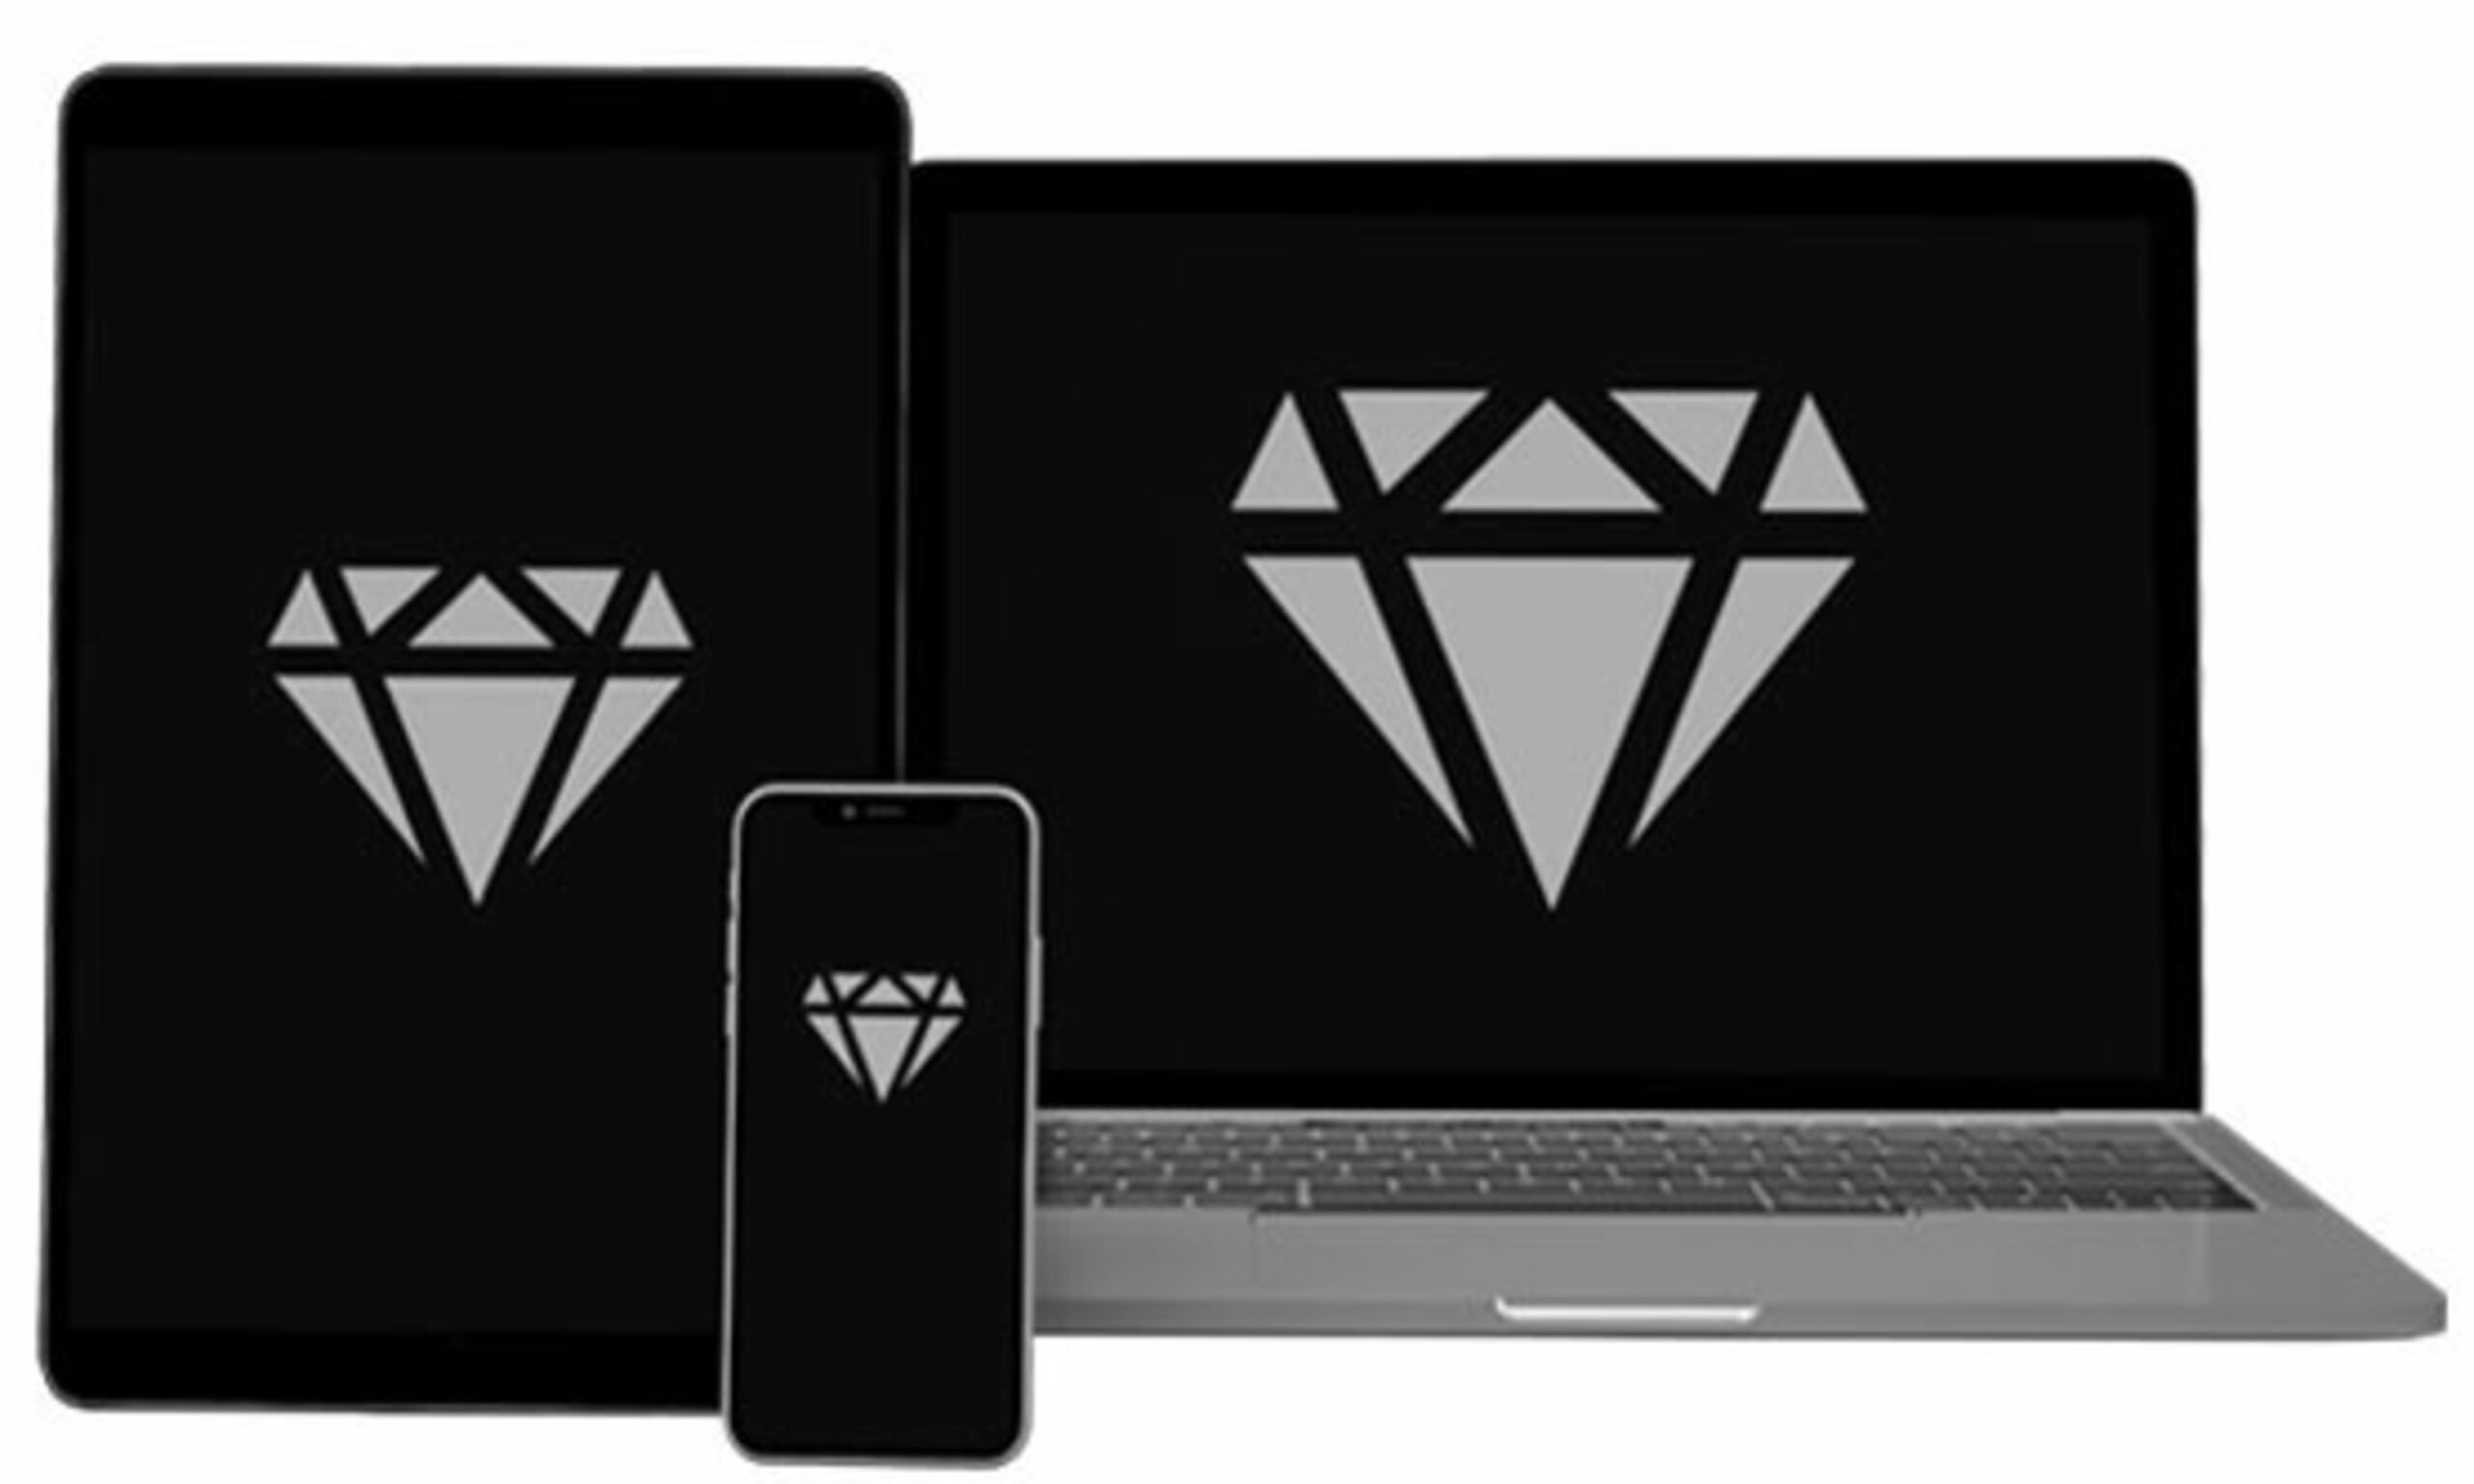 jyd-project-doinvestors-app-phone-tablet-laptopview